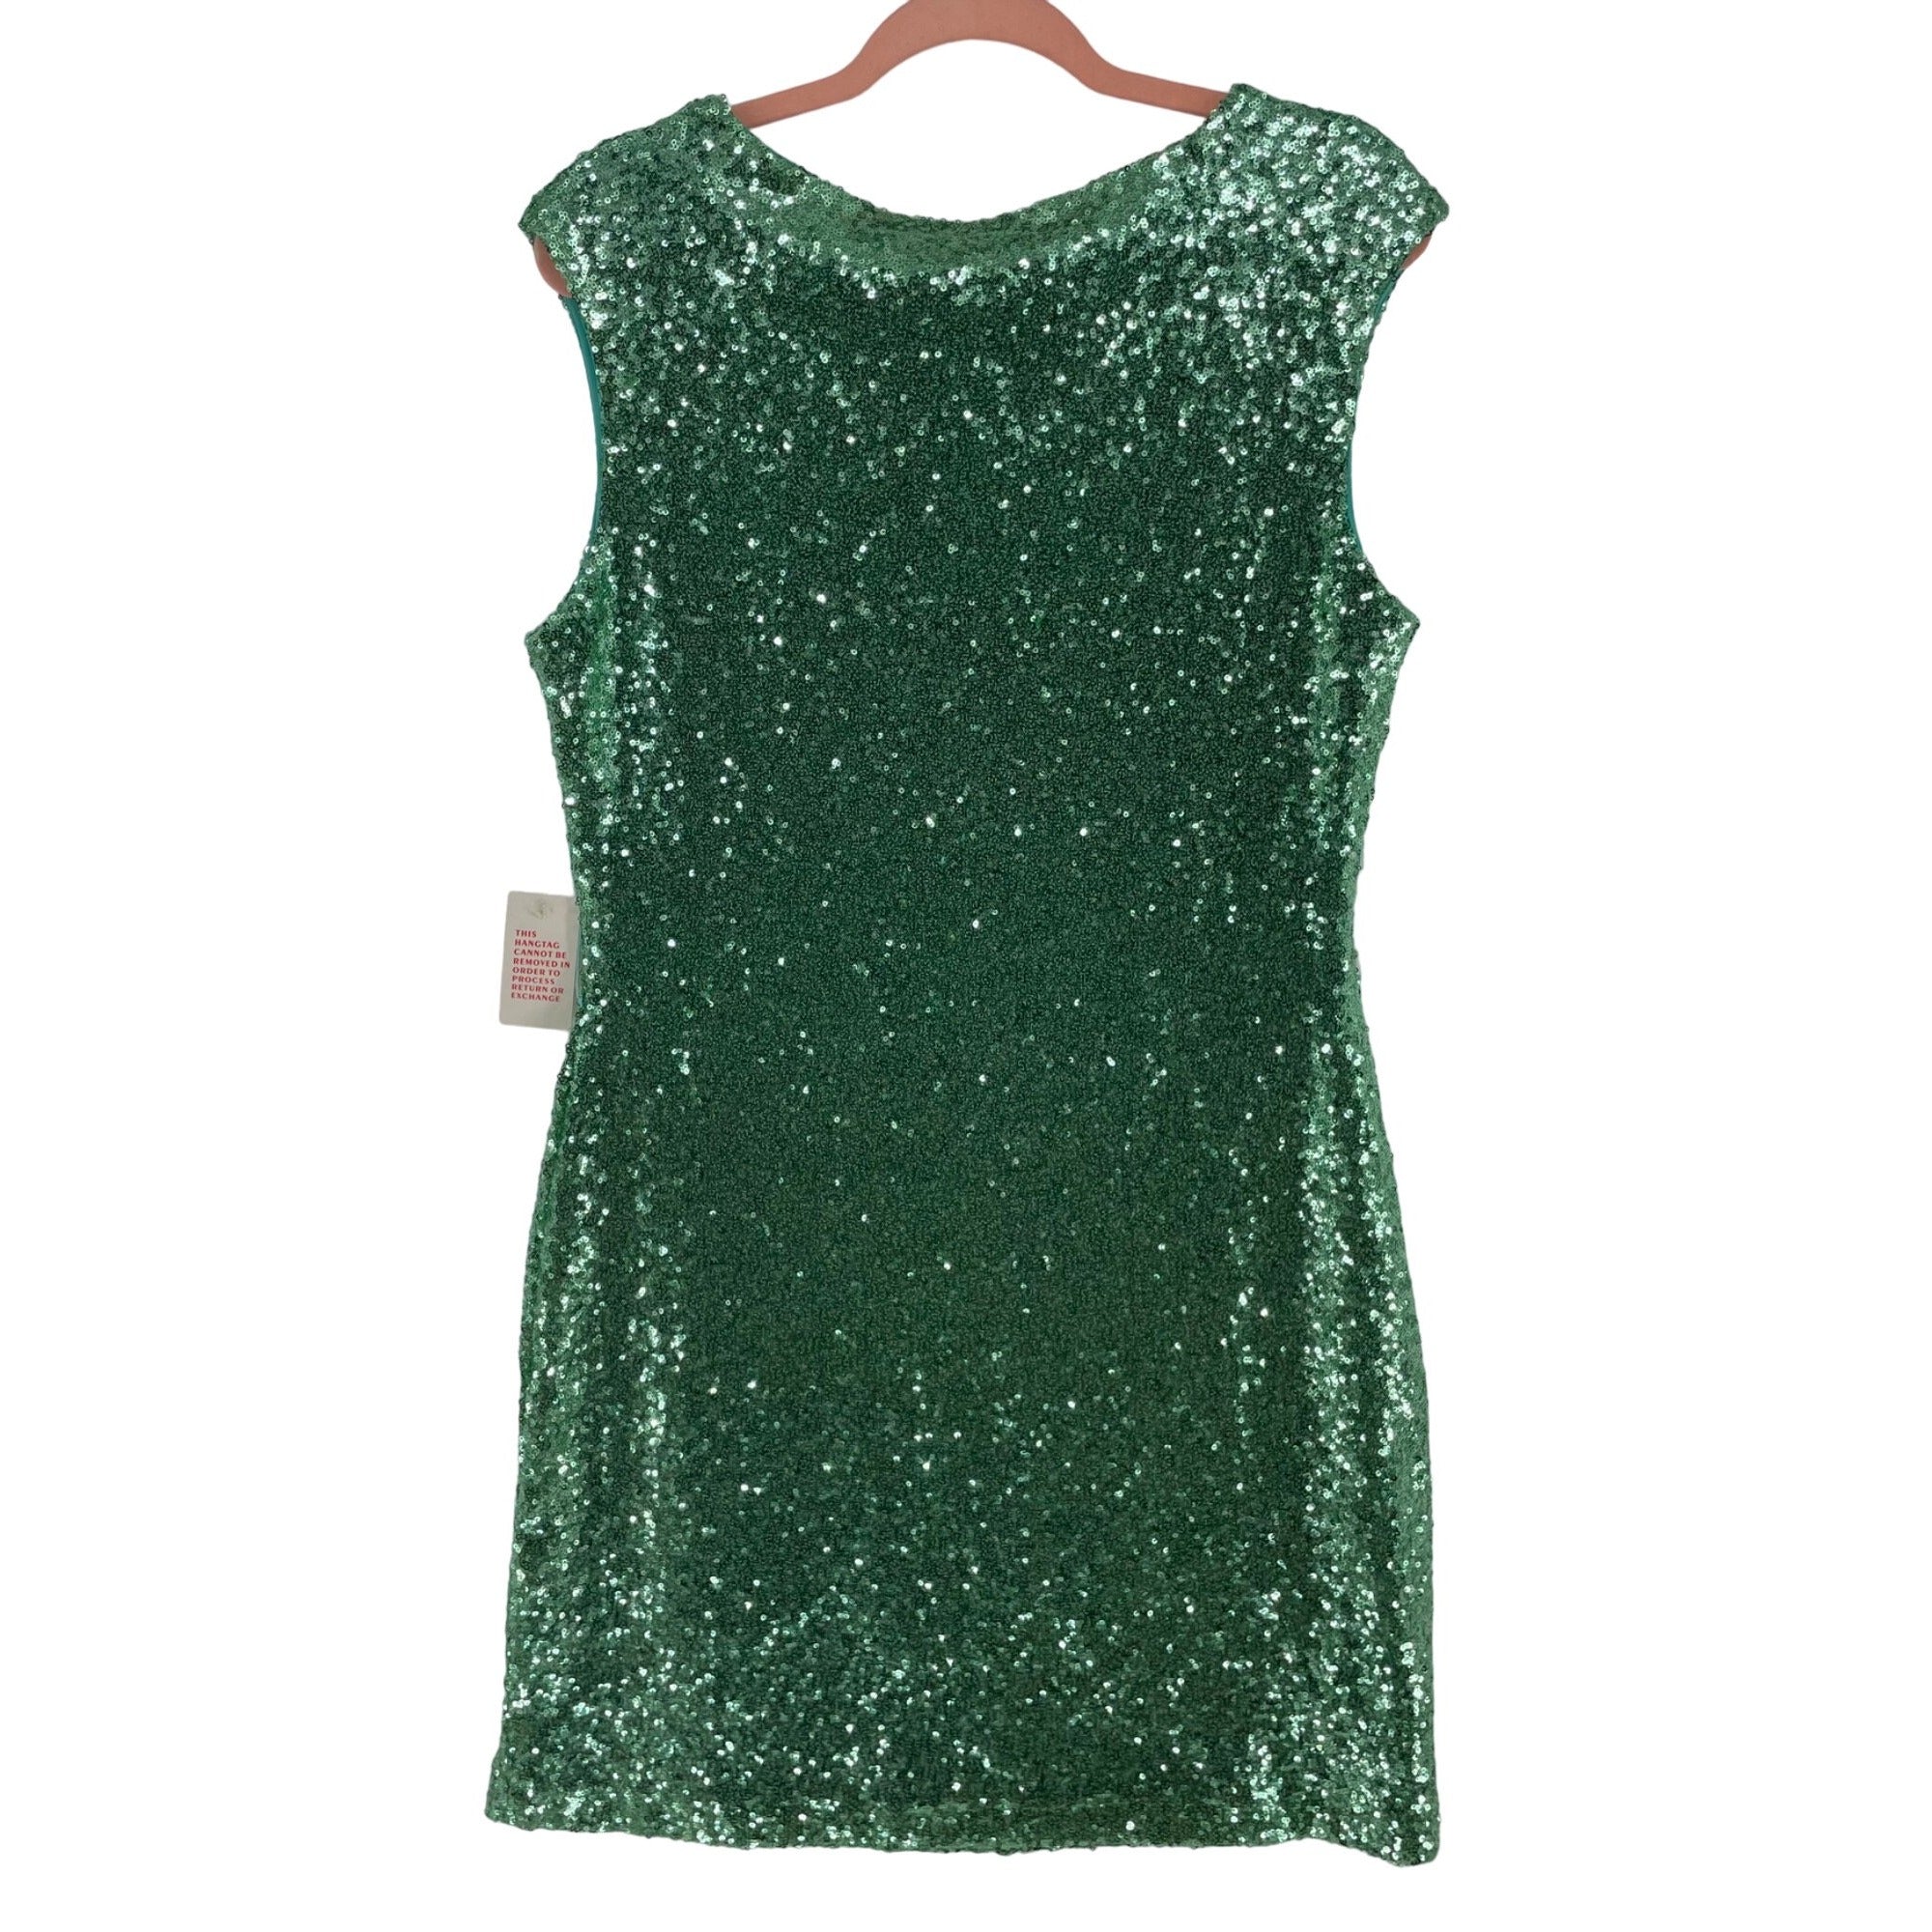 NWT Venus Women's Size Large Aqua Green Sleeveless Sequin Dress